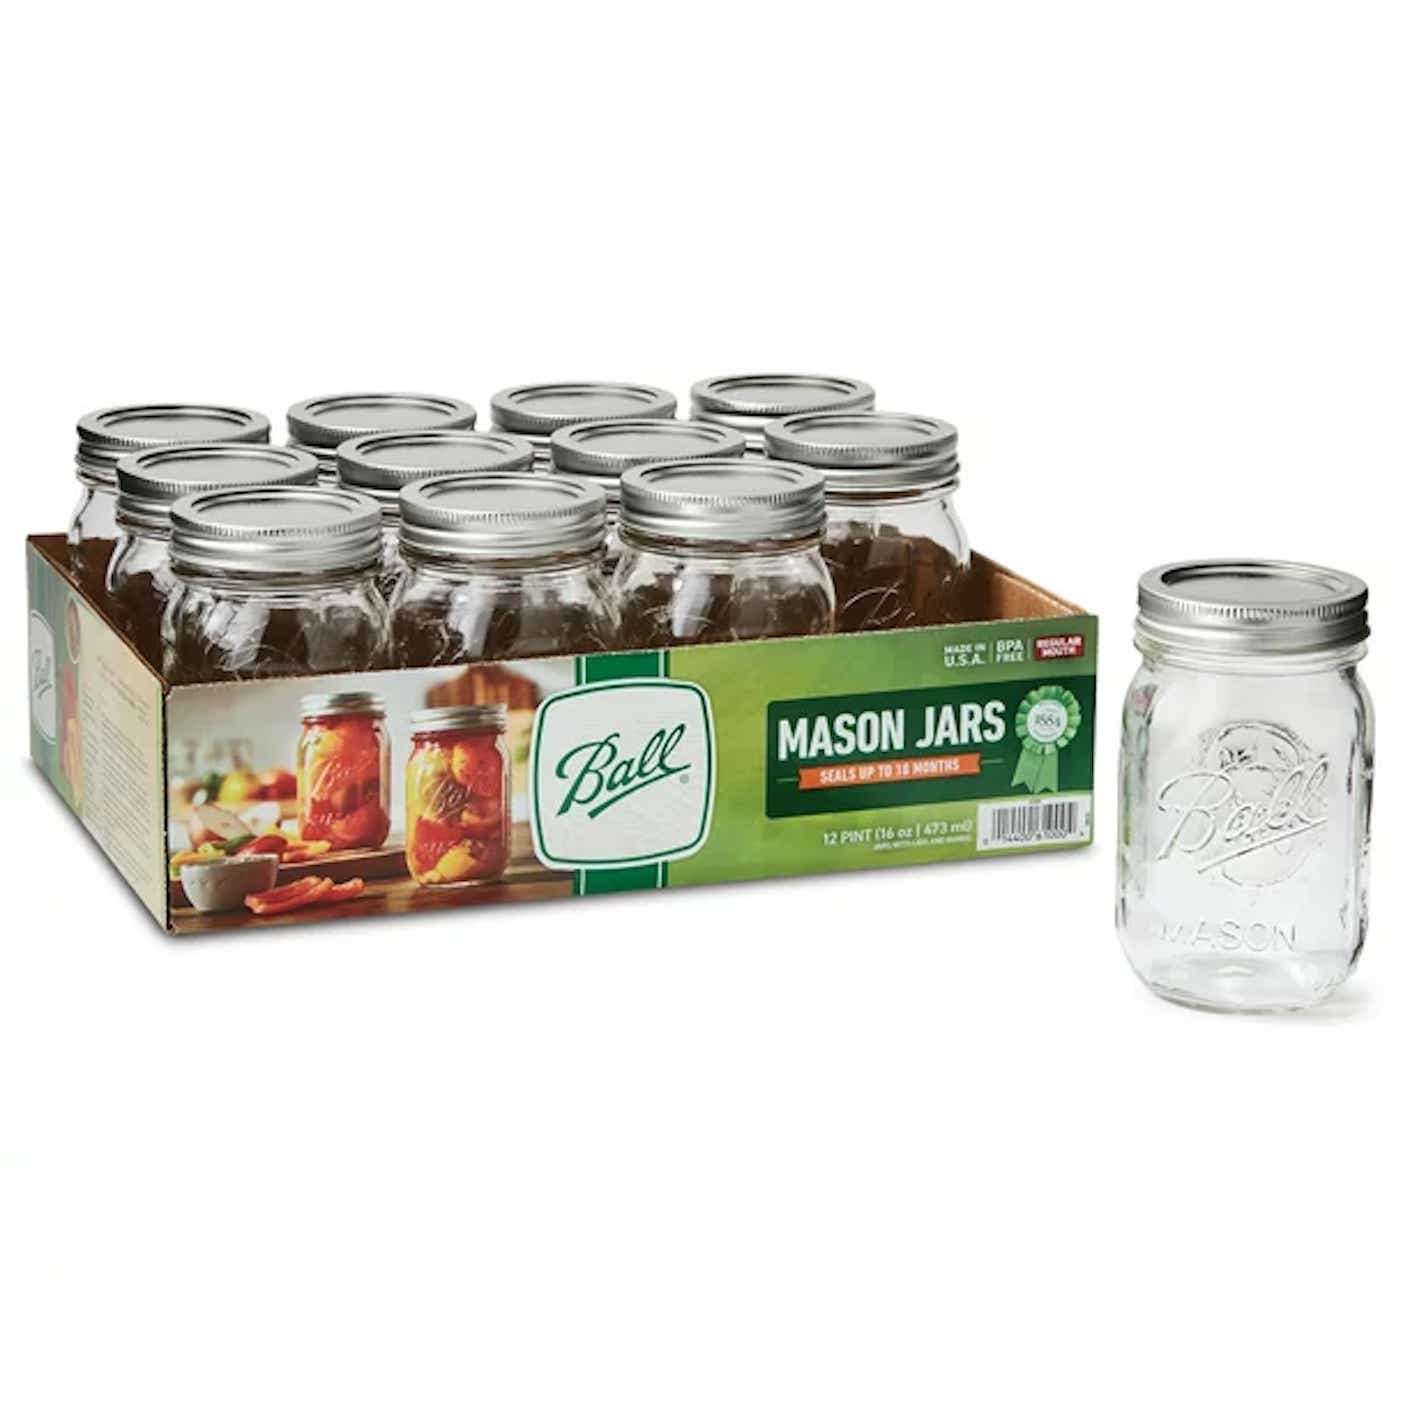 A set of 12 clear glass mason jars with metal lids sits in a flat cardboard box.